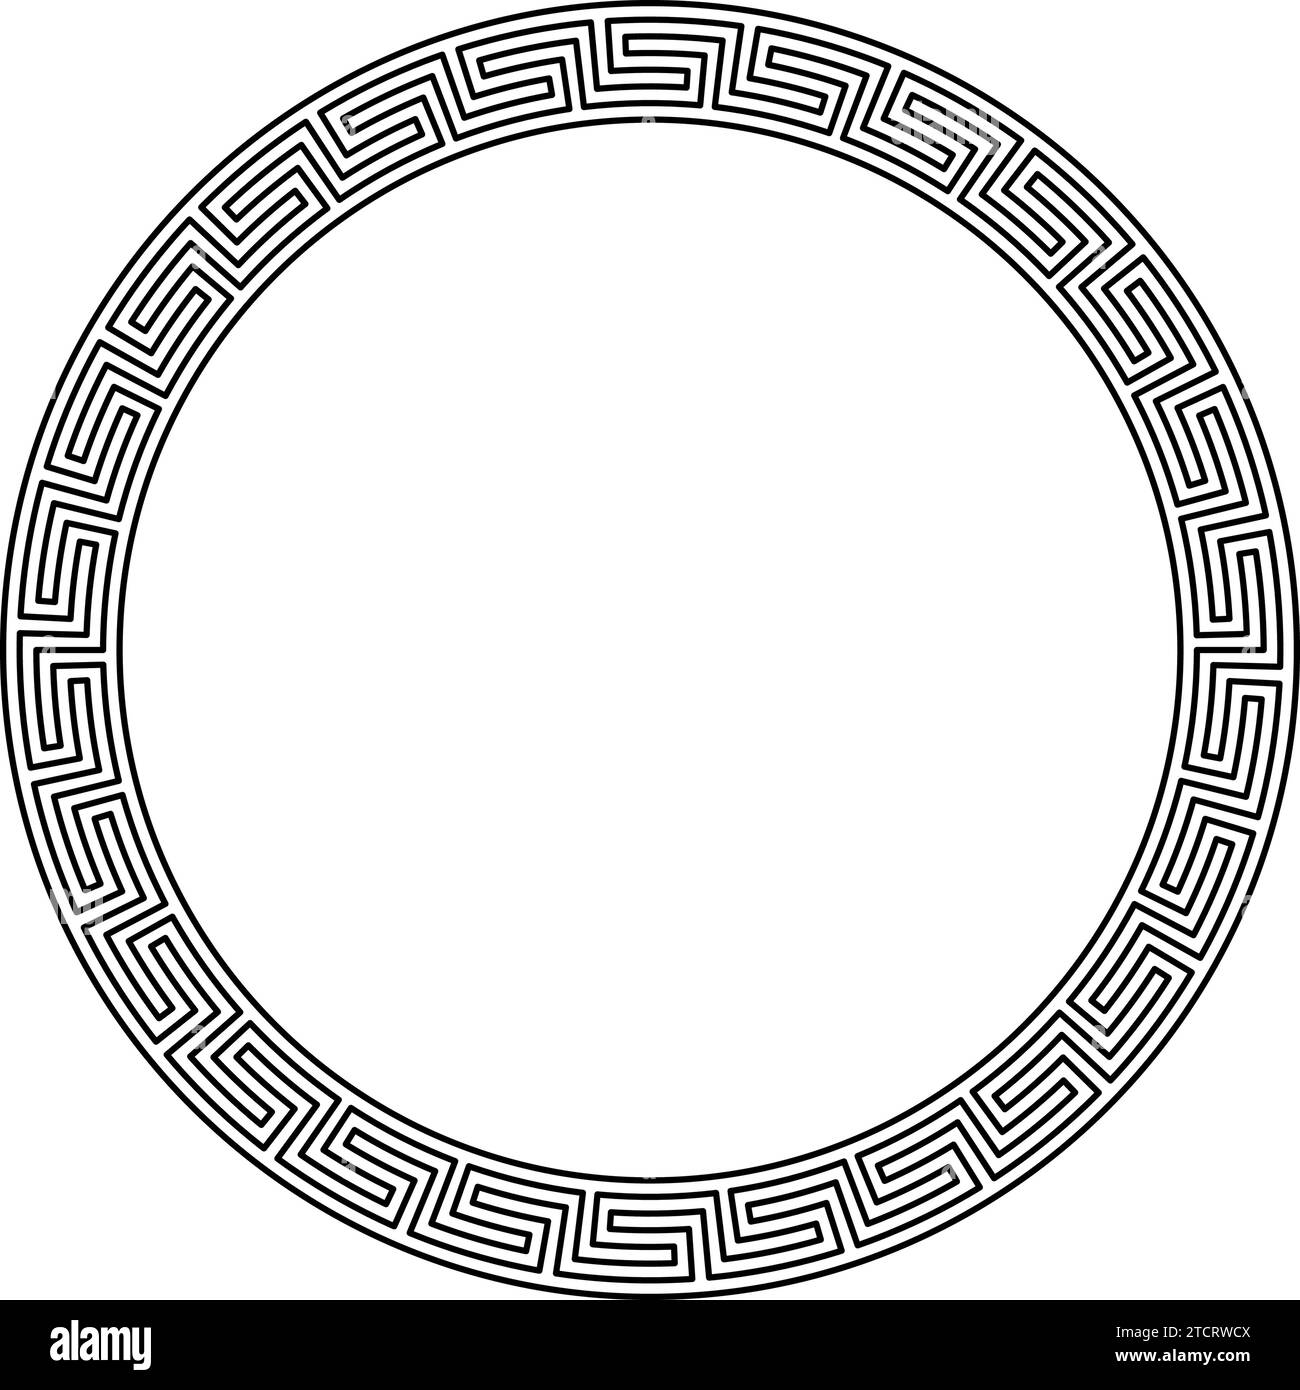 Black circle ornament border. Vector illustration. Stock Vector